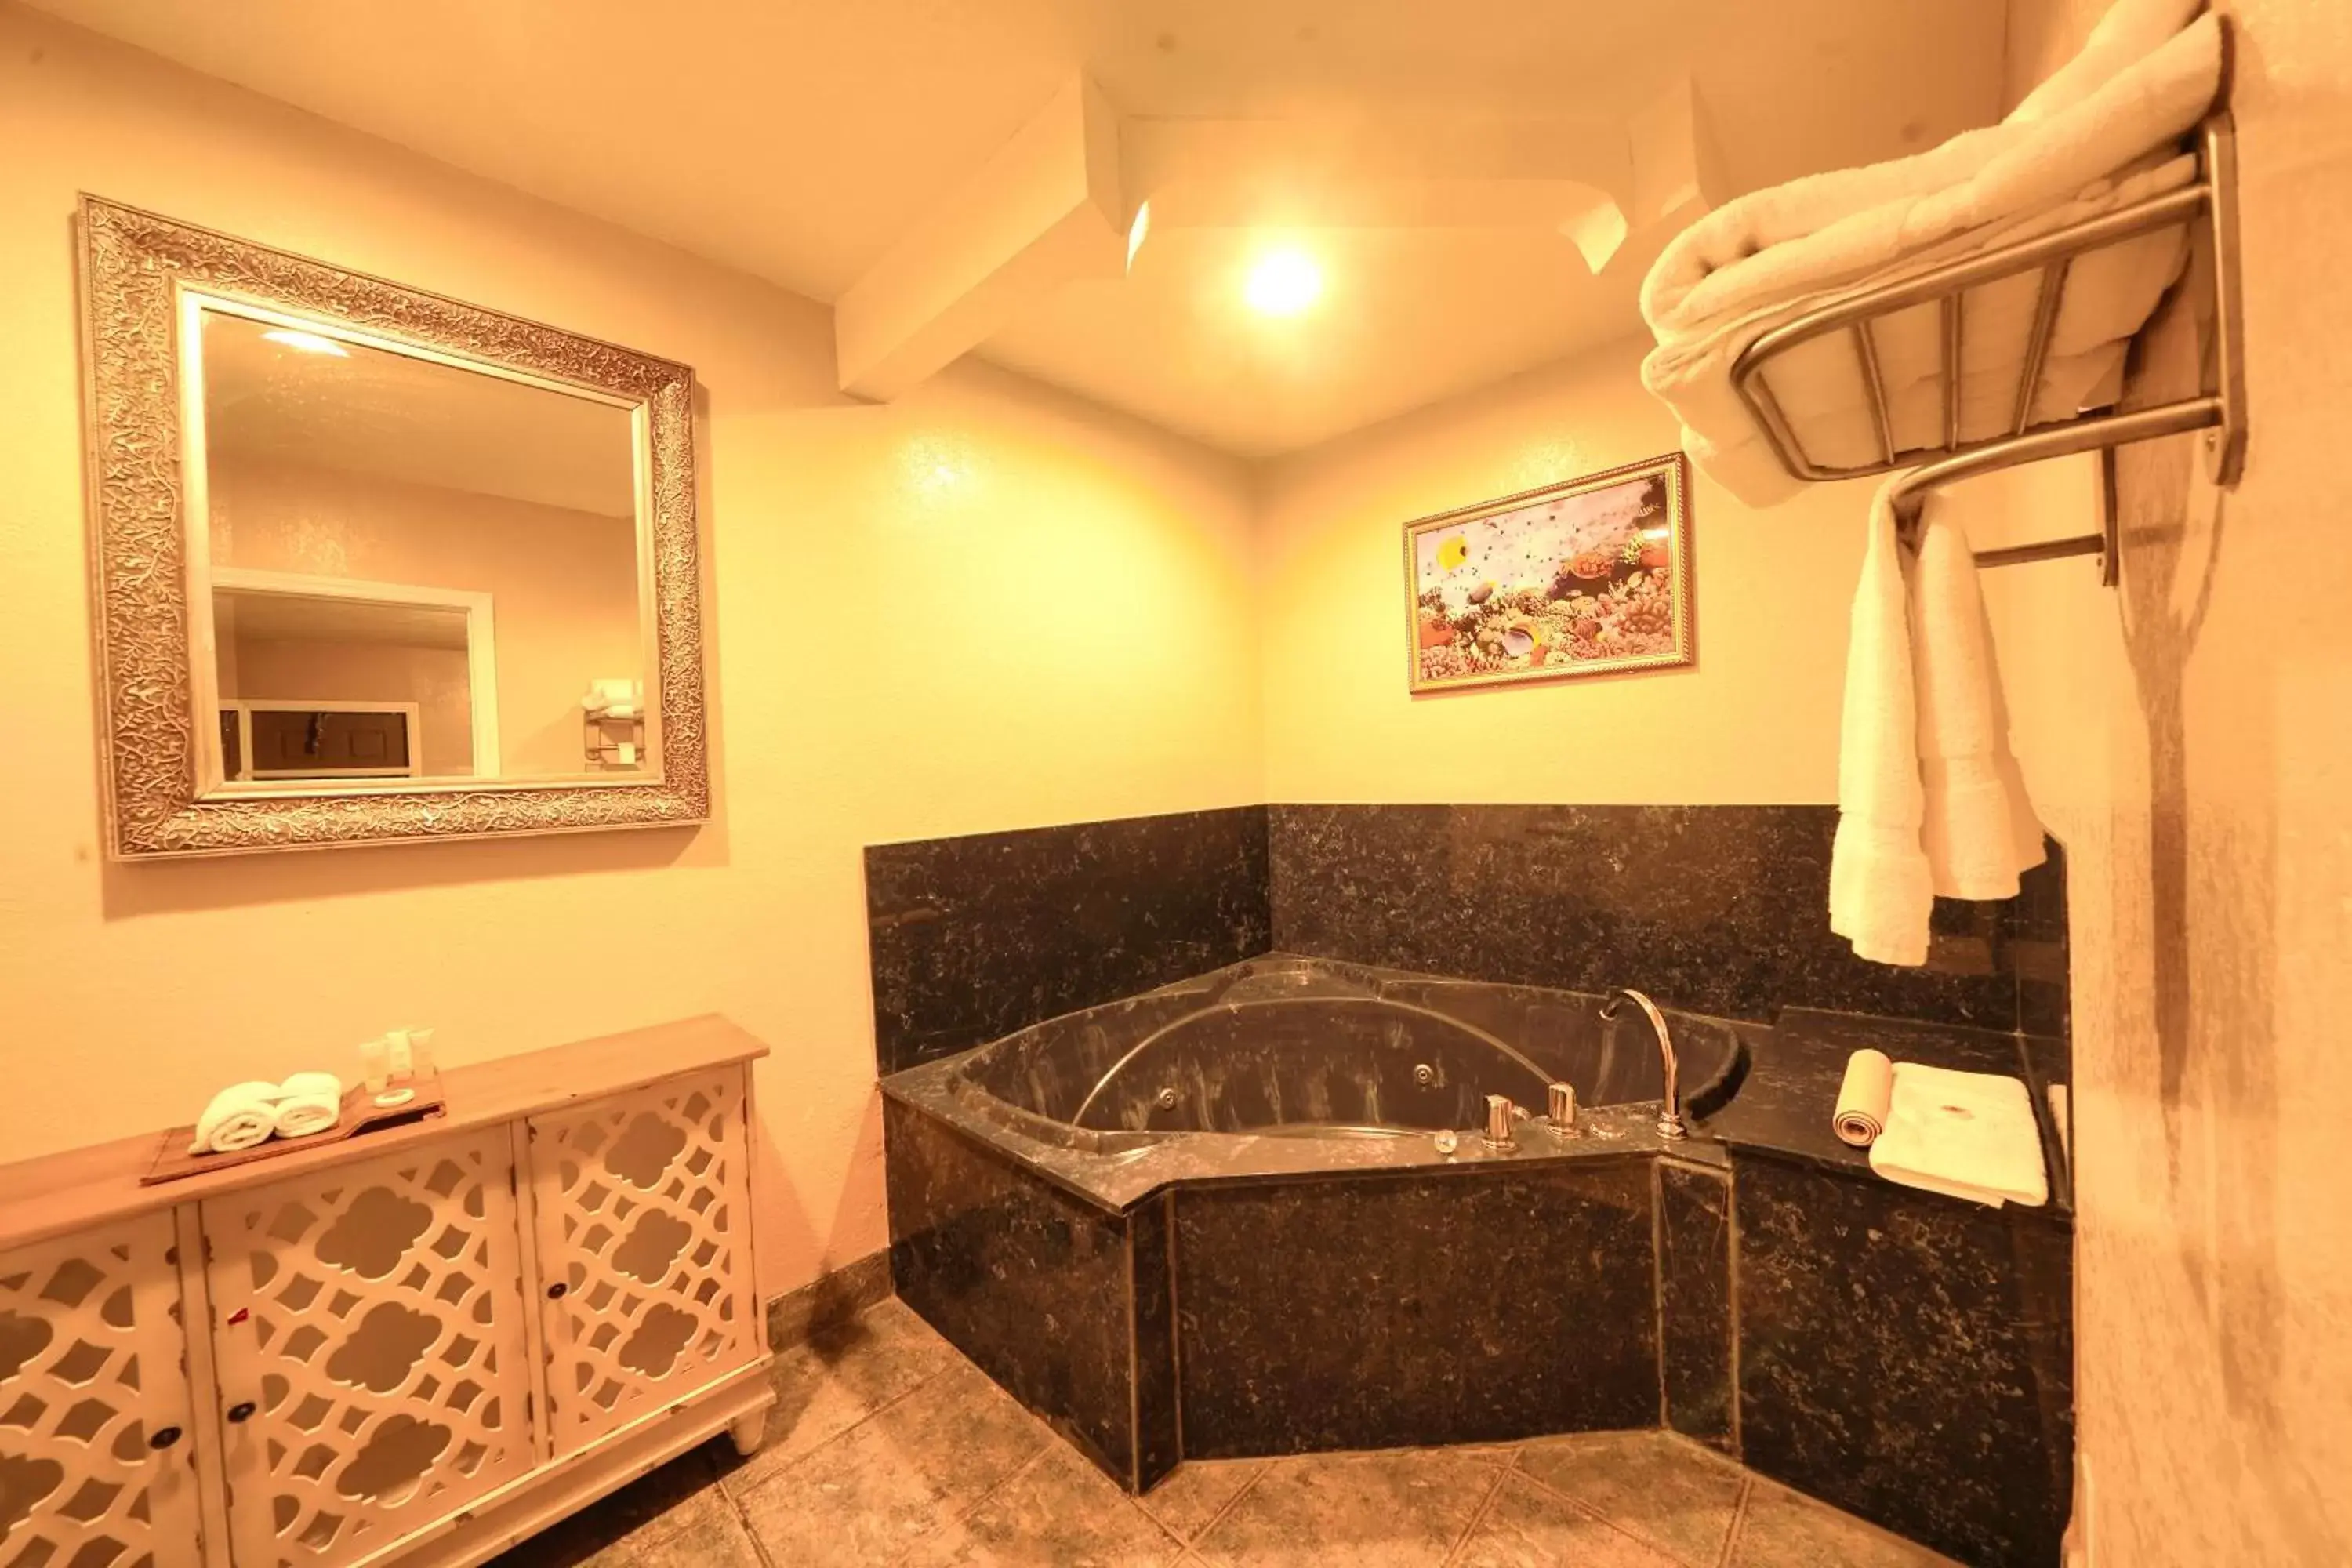 Bathroom in Sandals Inn